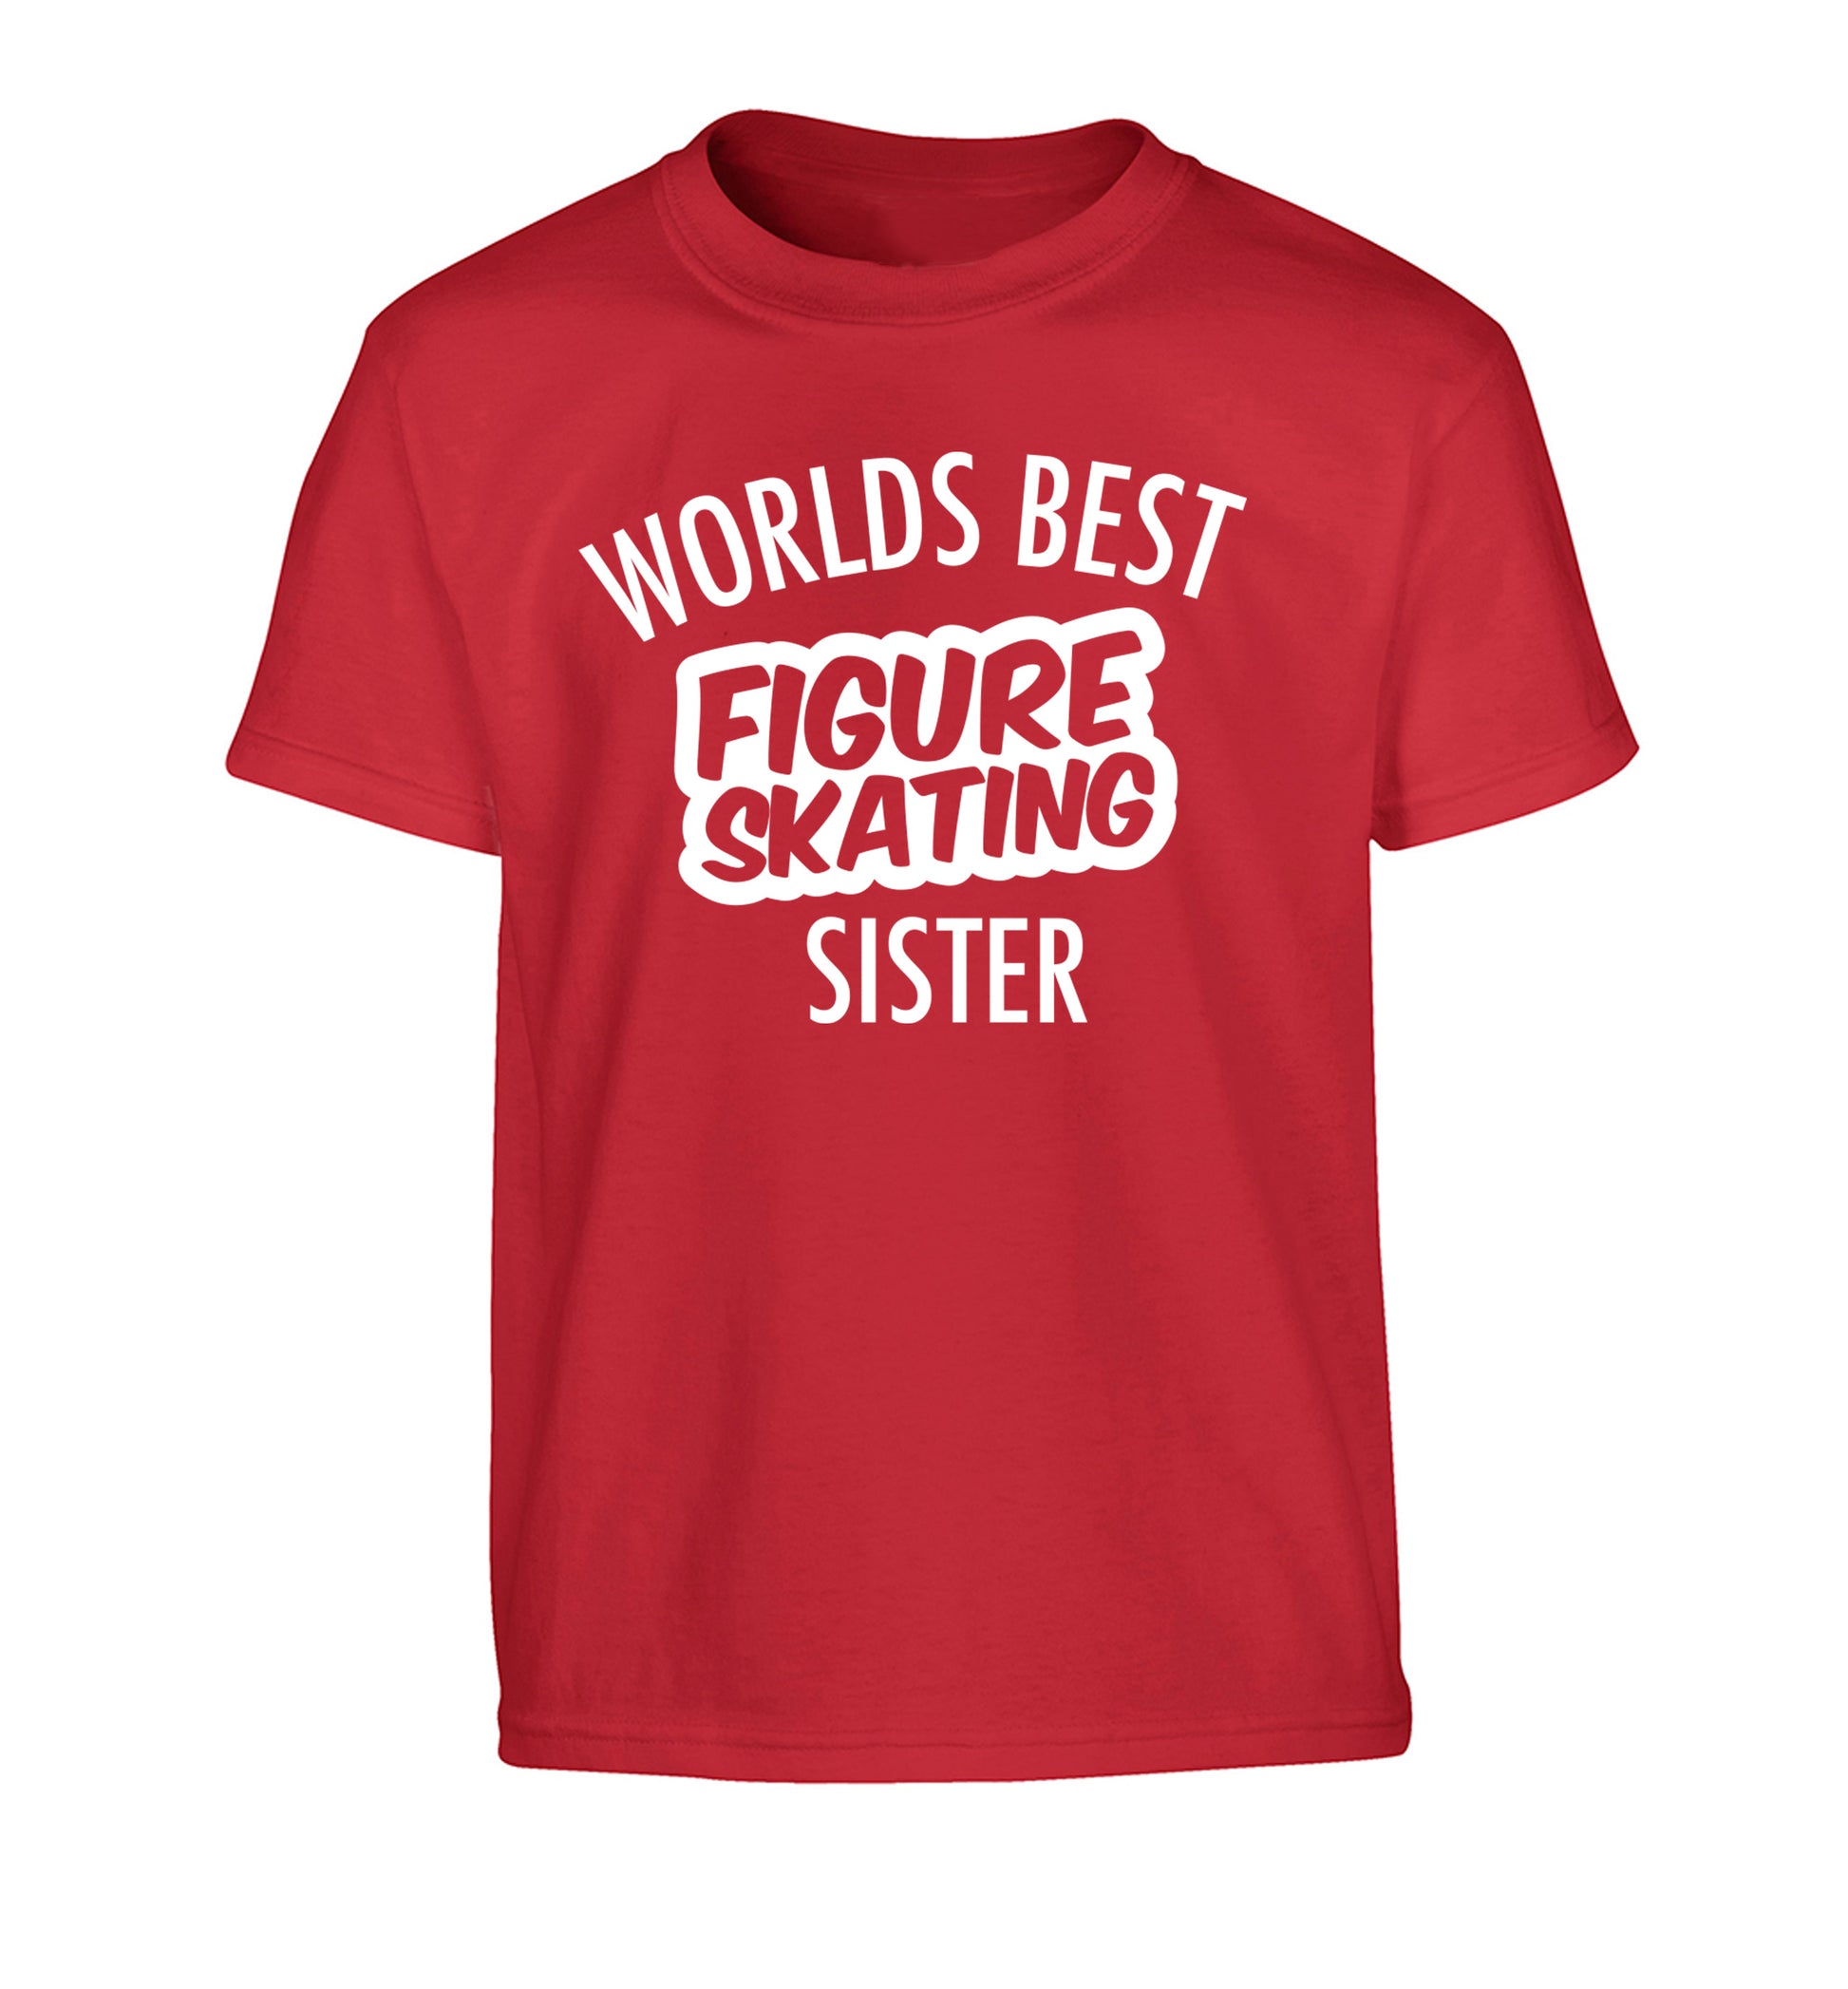 Worlds best figure skating sisterChildren's red Tshirt 12-14 Years